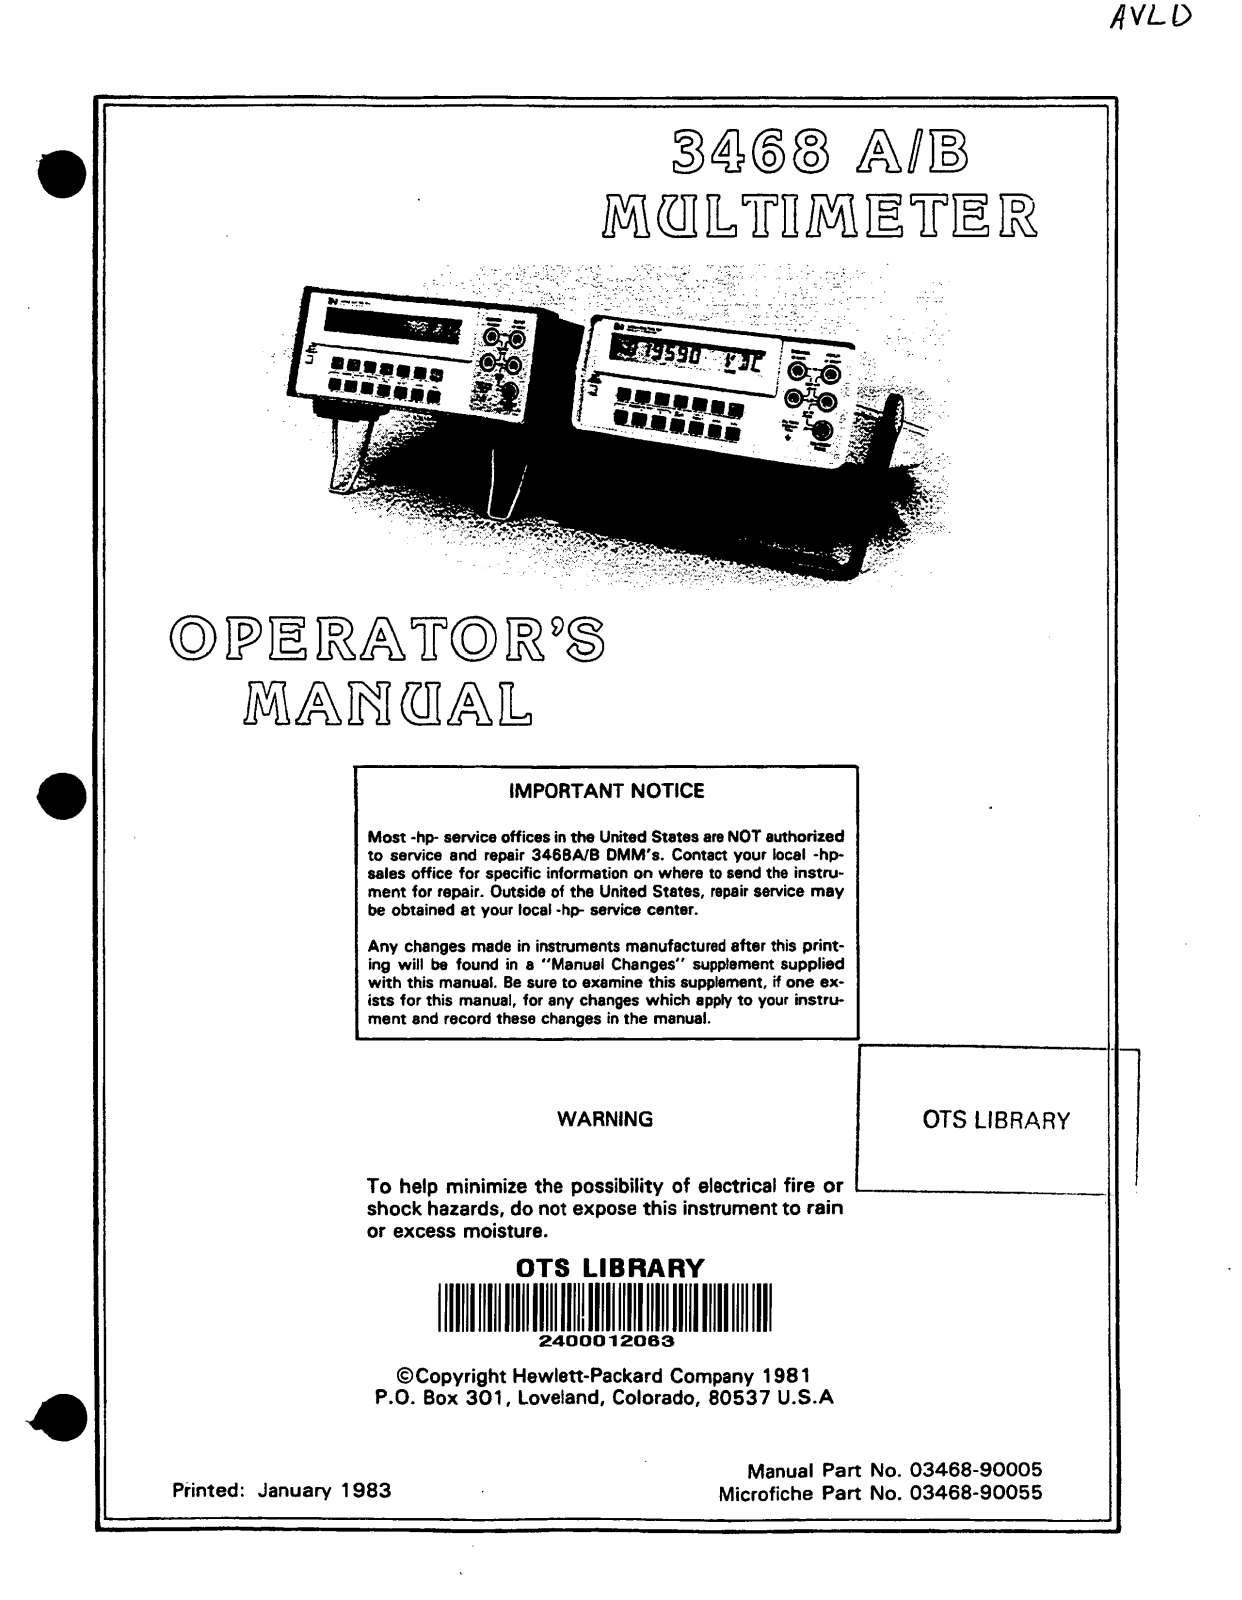 HP 3468A/B MULTIMETER OPERATORS MANUAL  USED